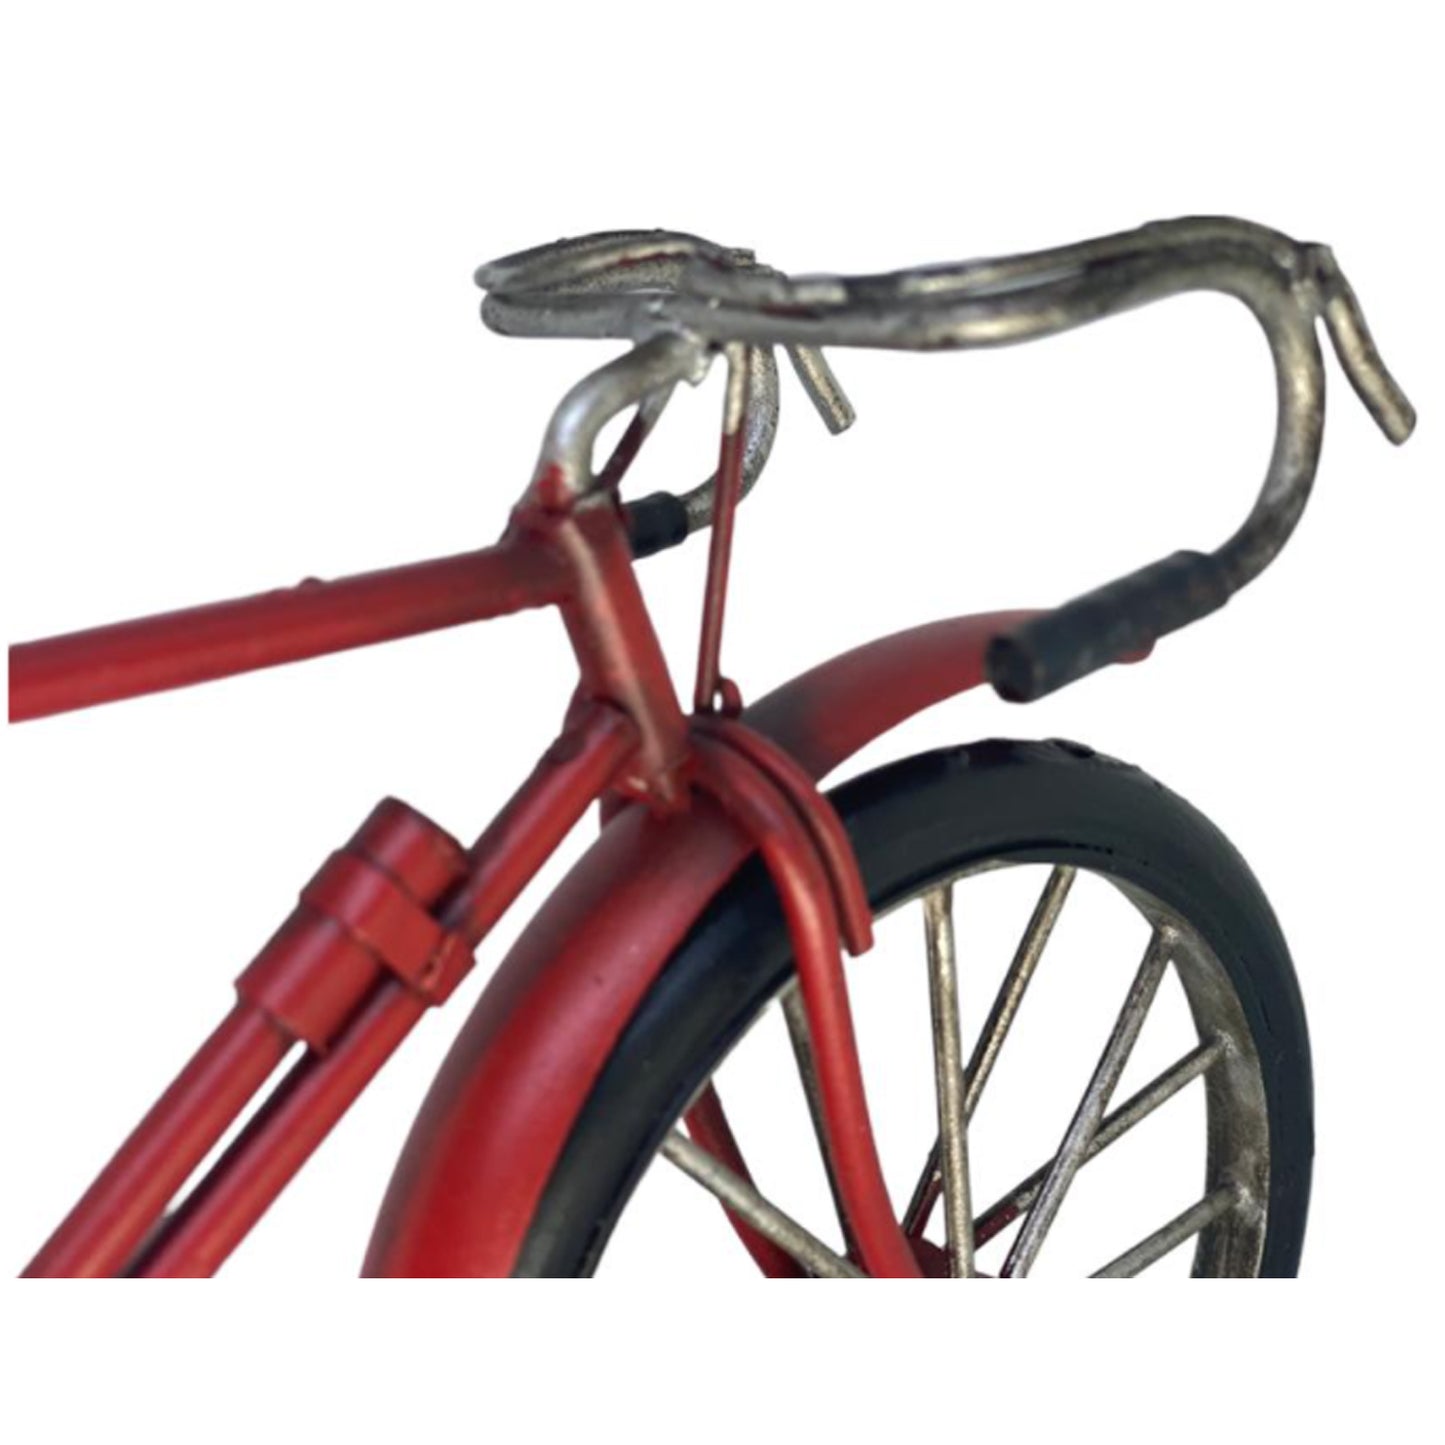 Adorno metálico bicicleta vintage 30x17x7 cm.